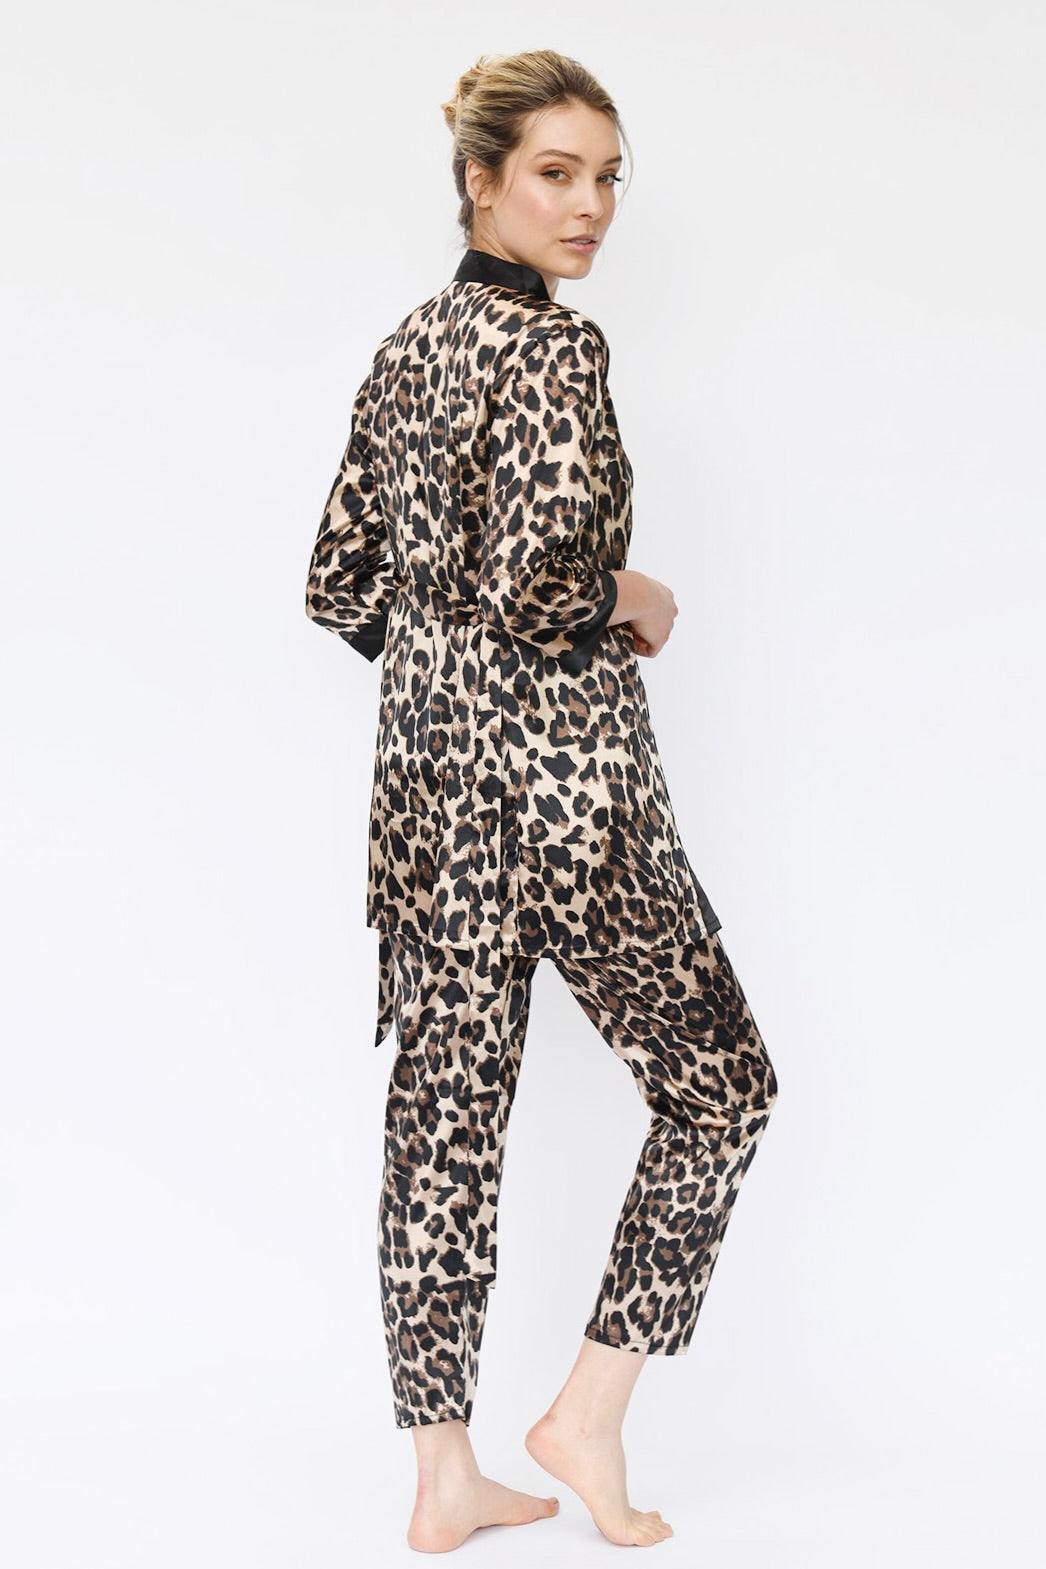 Pijama completo animal print